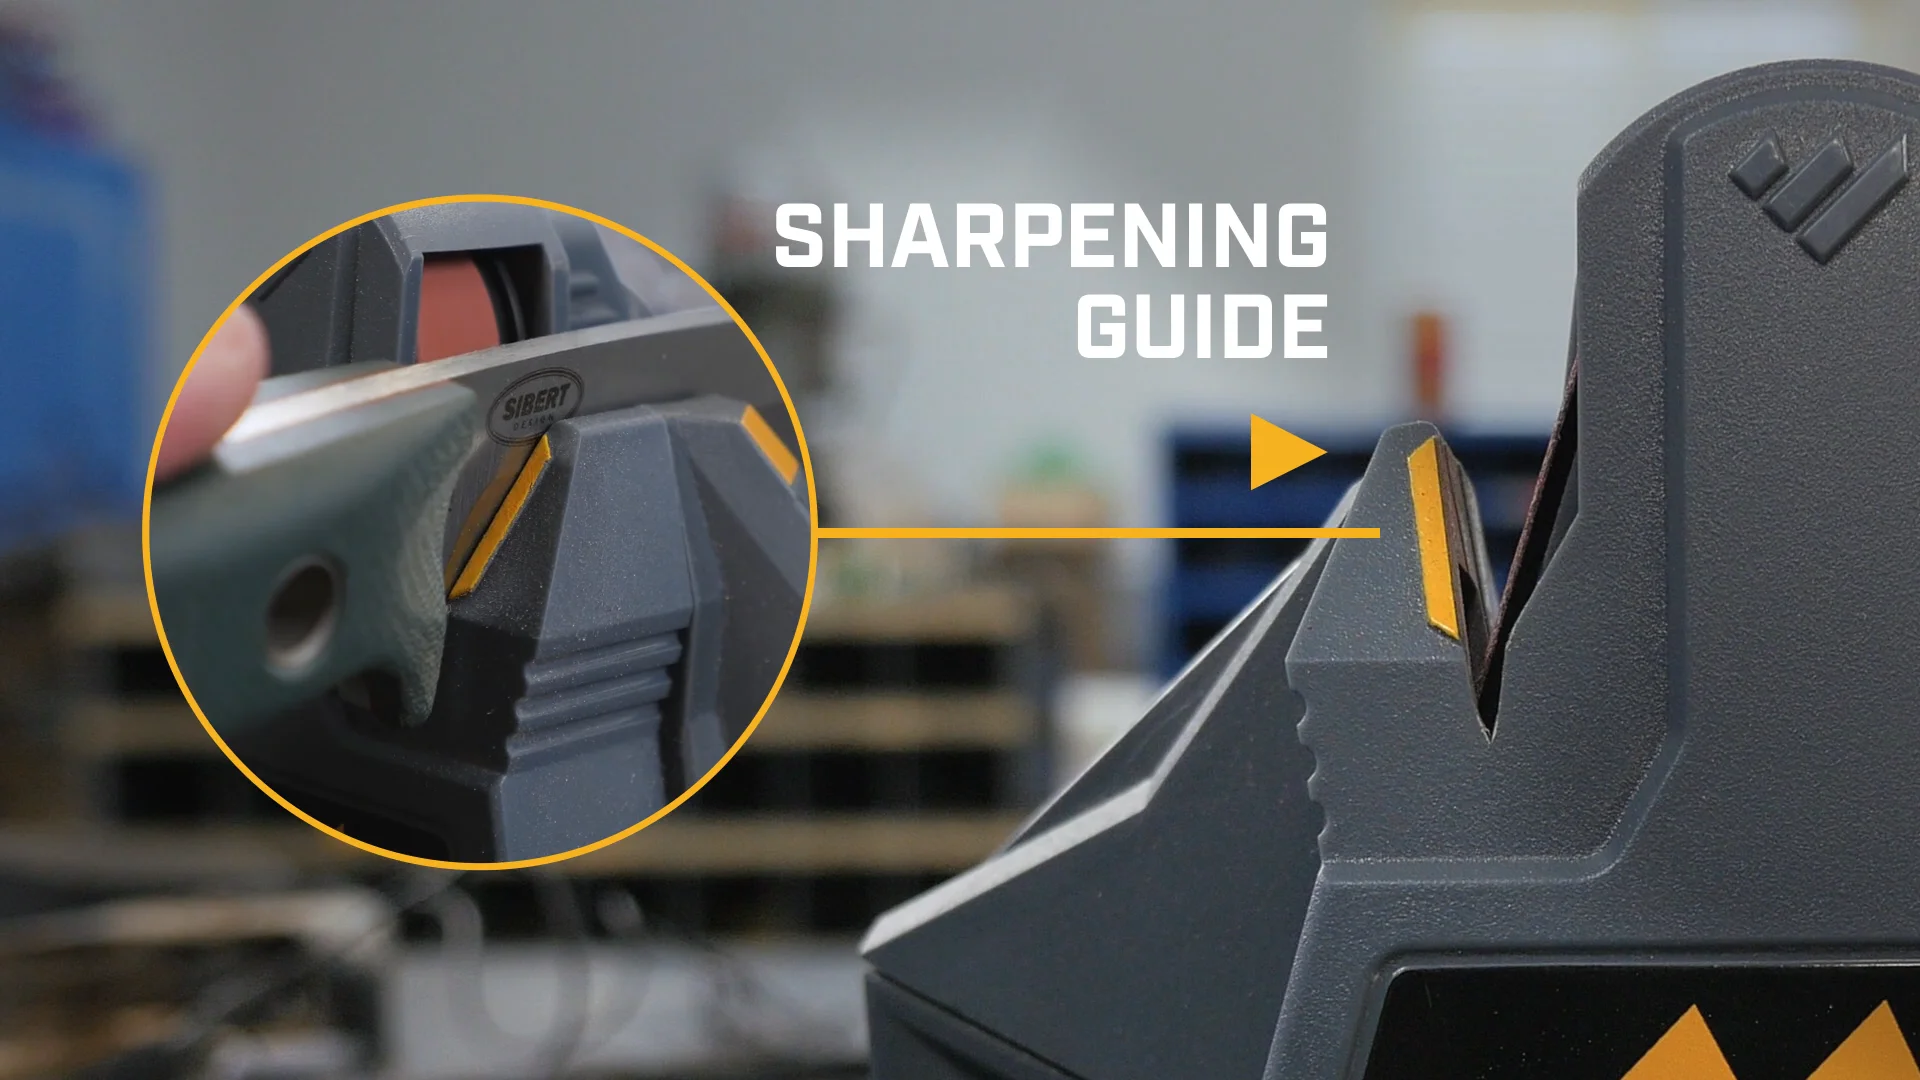 Work Sharp - Guided Sharpening System on Vimeo